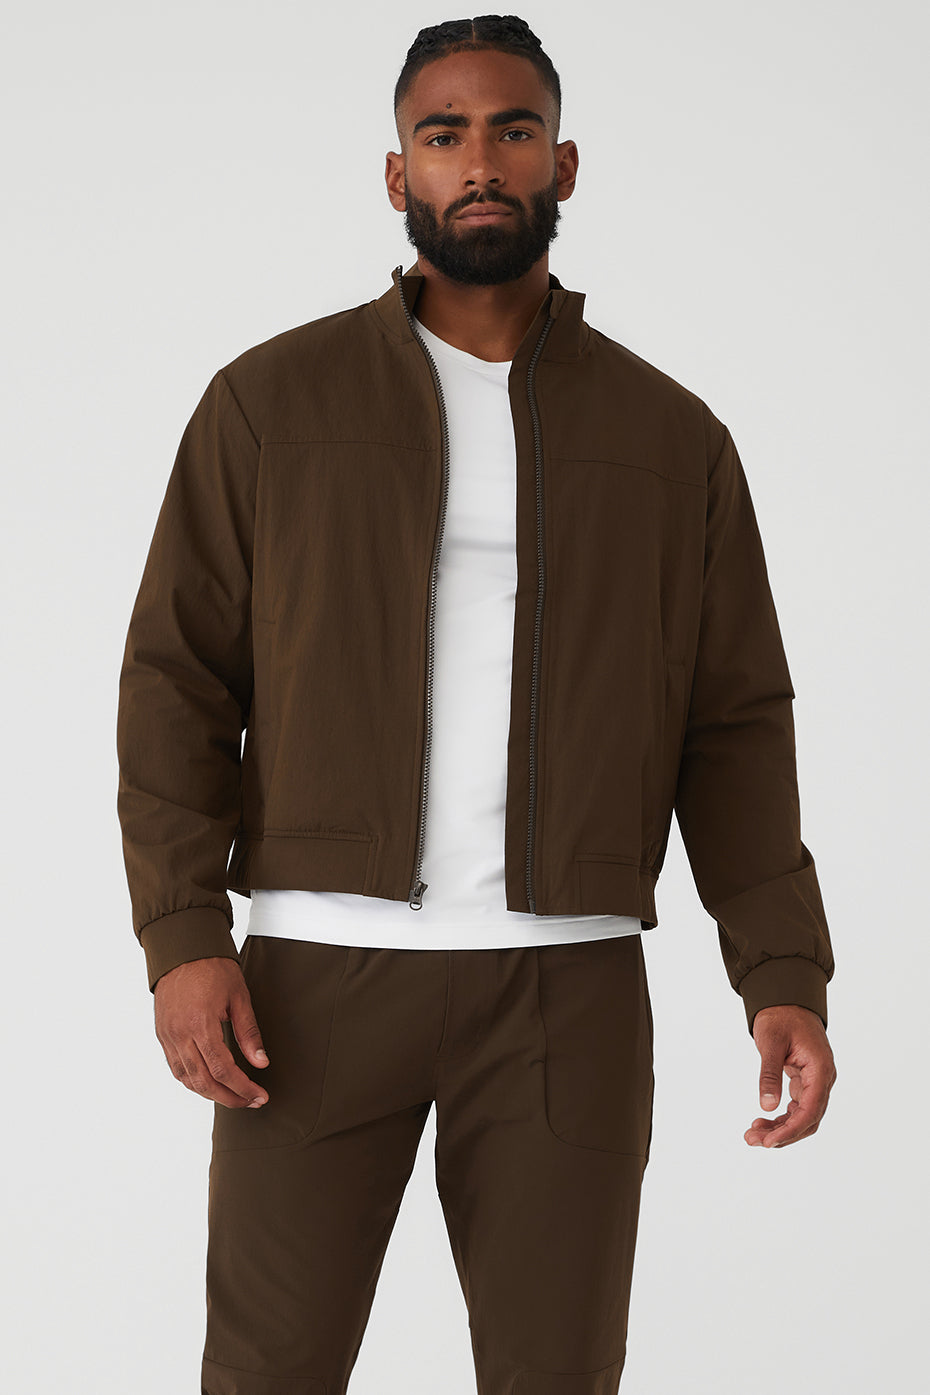 brown bomber jacket